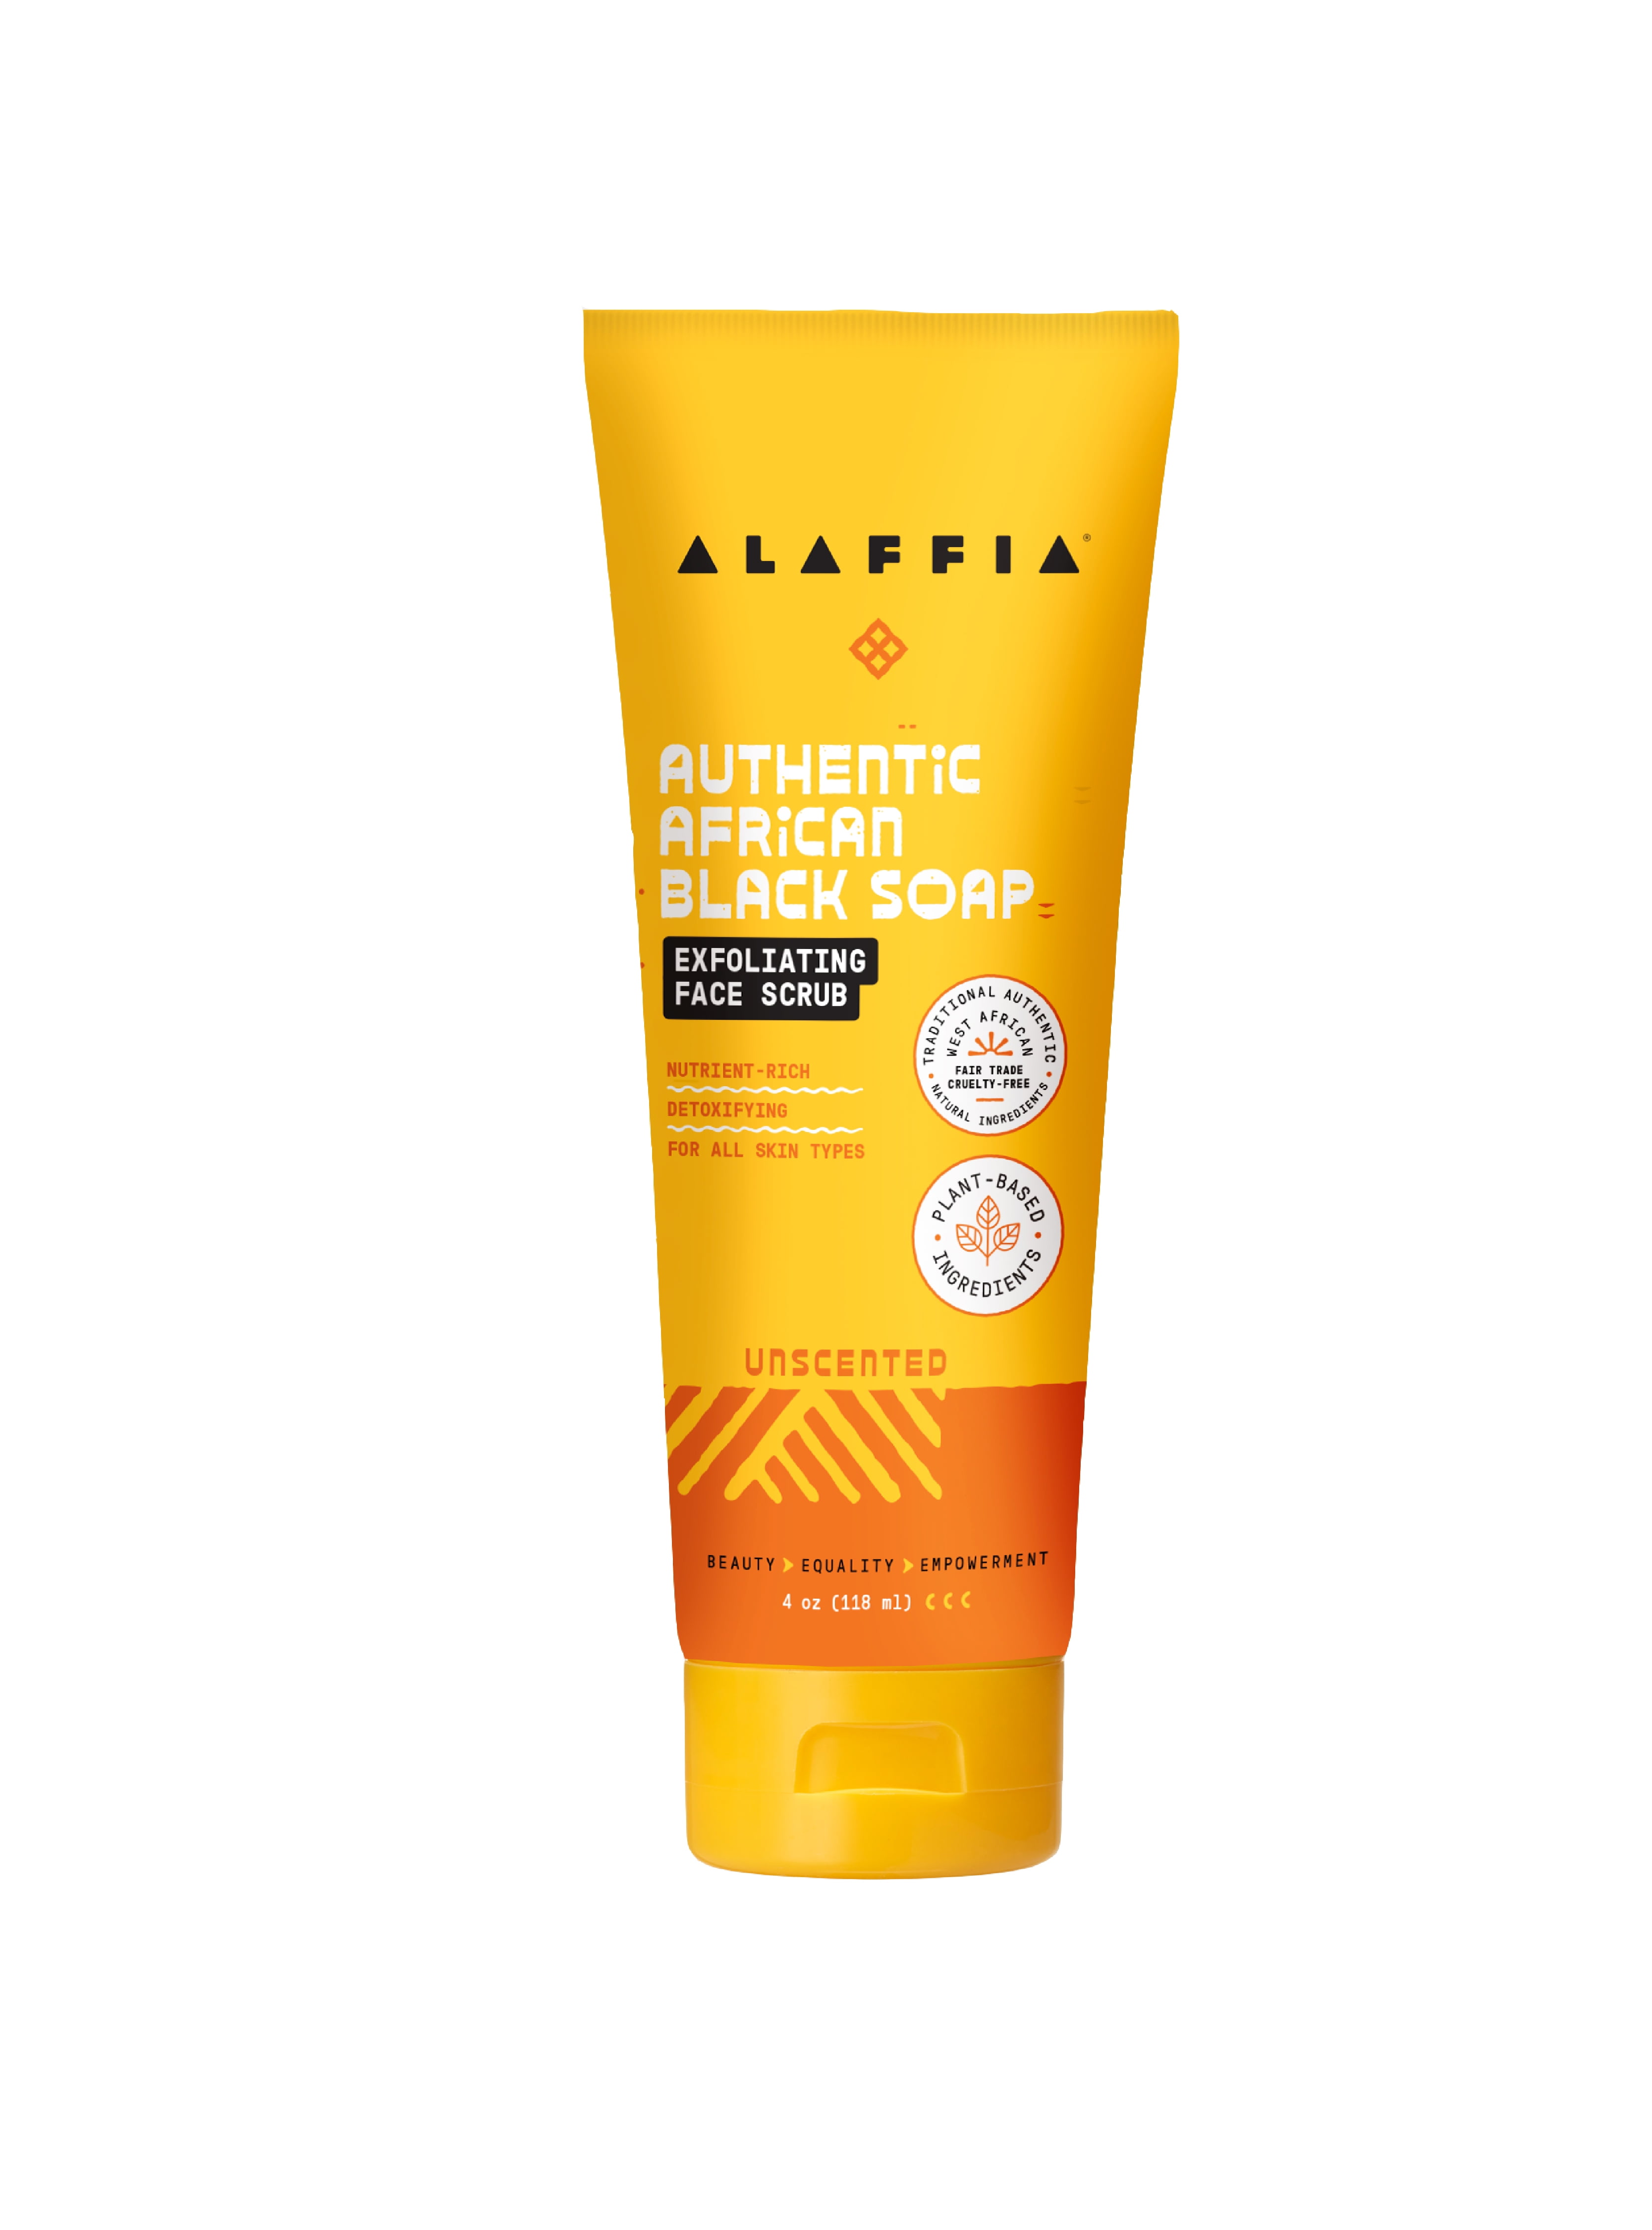 Alaffia Authentic African Black Soap Exfoliating Face Scrub Unscented, 3.4 oz